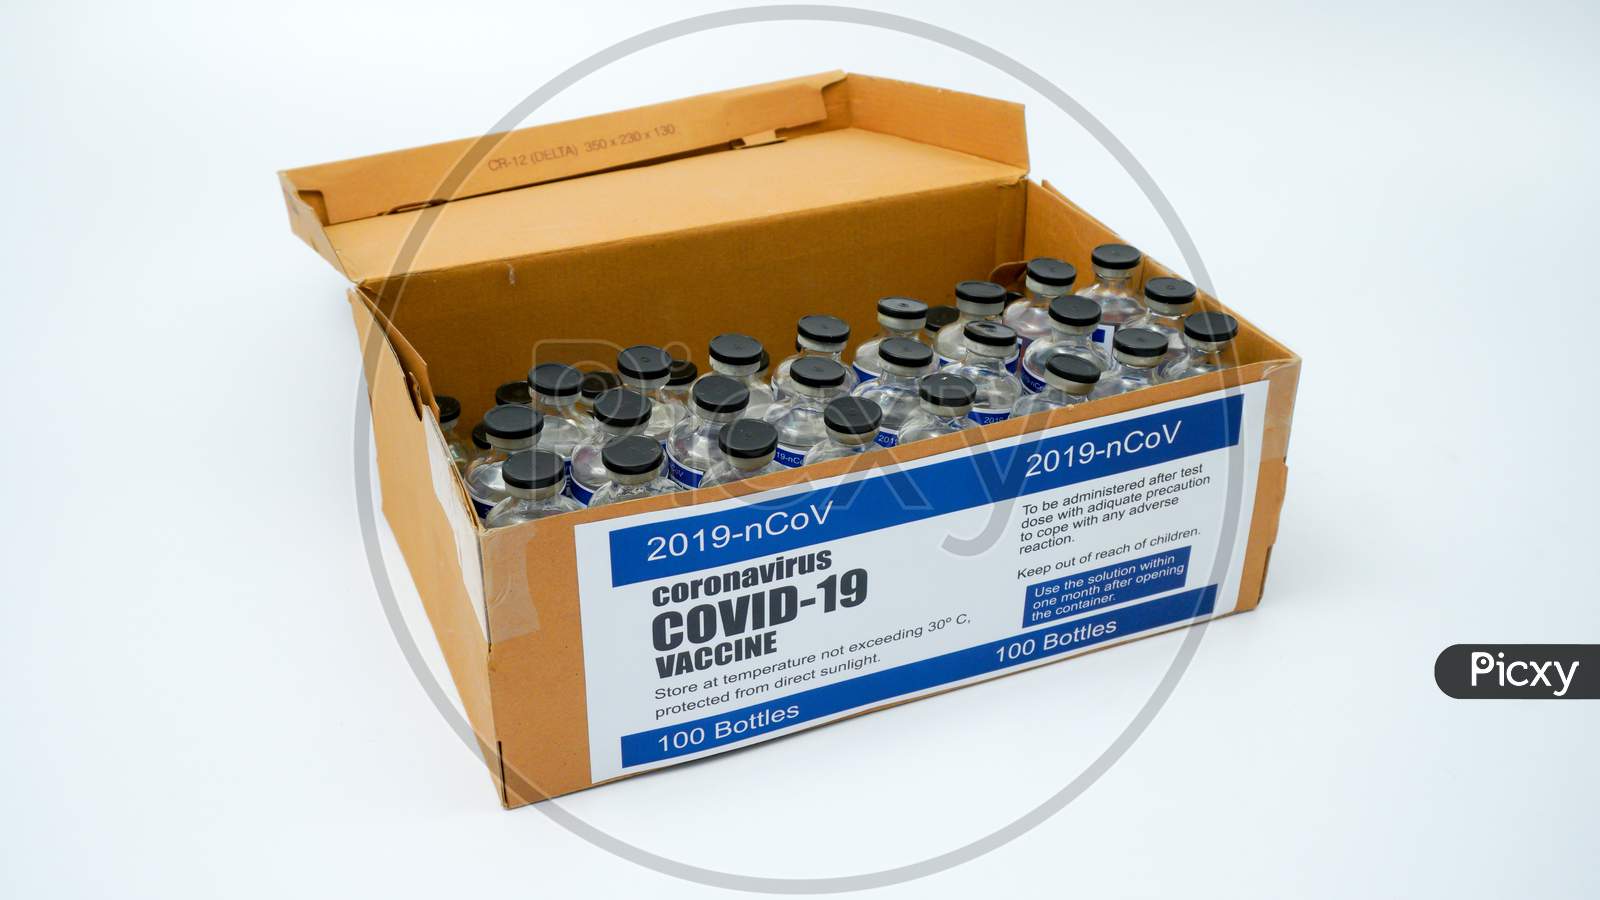 Covid-19 Corona Virus 2019-Ncov Sars-Cov-2 Vaccine Medicine Drug Vials Bottles Syringe Box. Vaccination, Immunization, Treatment To Cure Covid 19 Corona Virus Infection Concept. White Background.